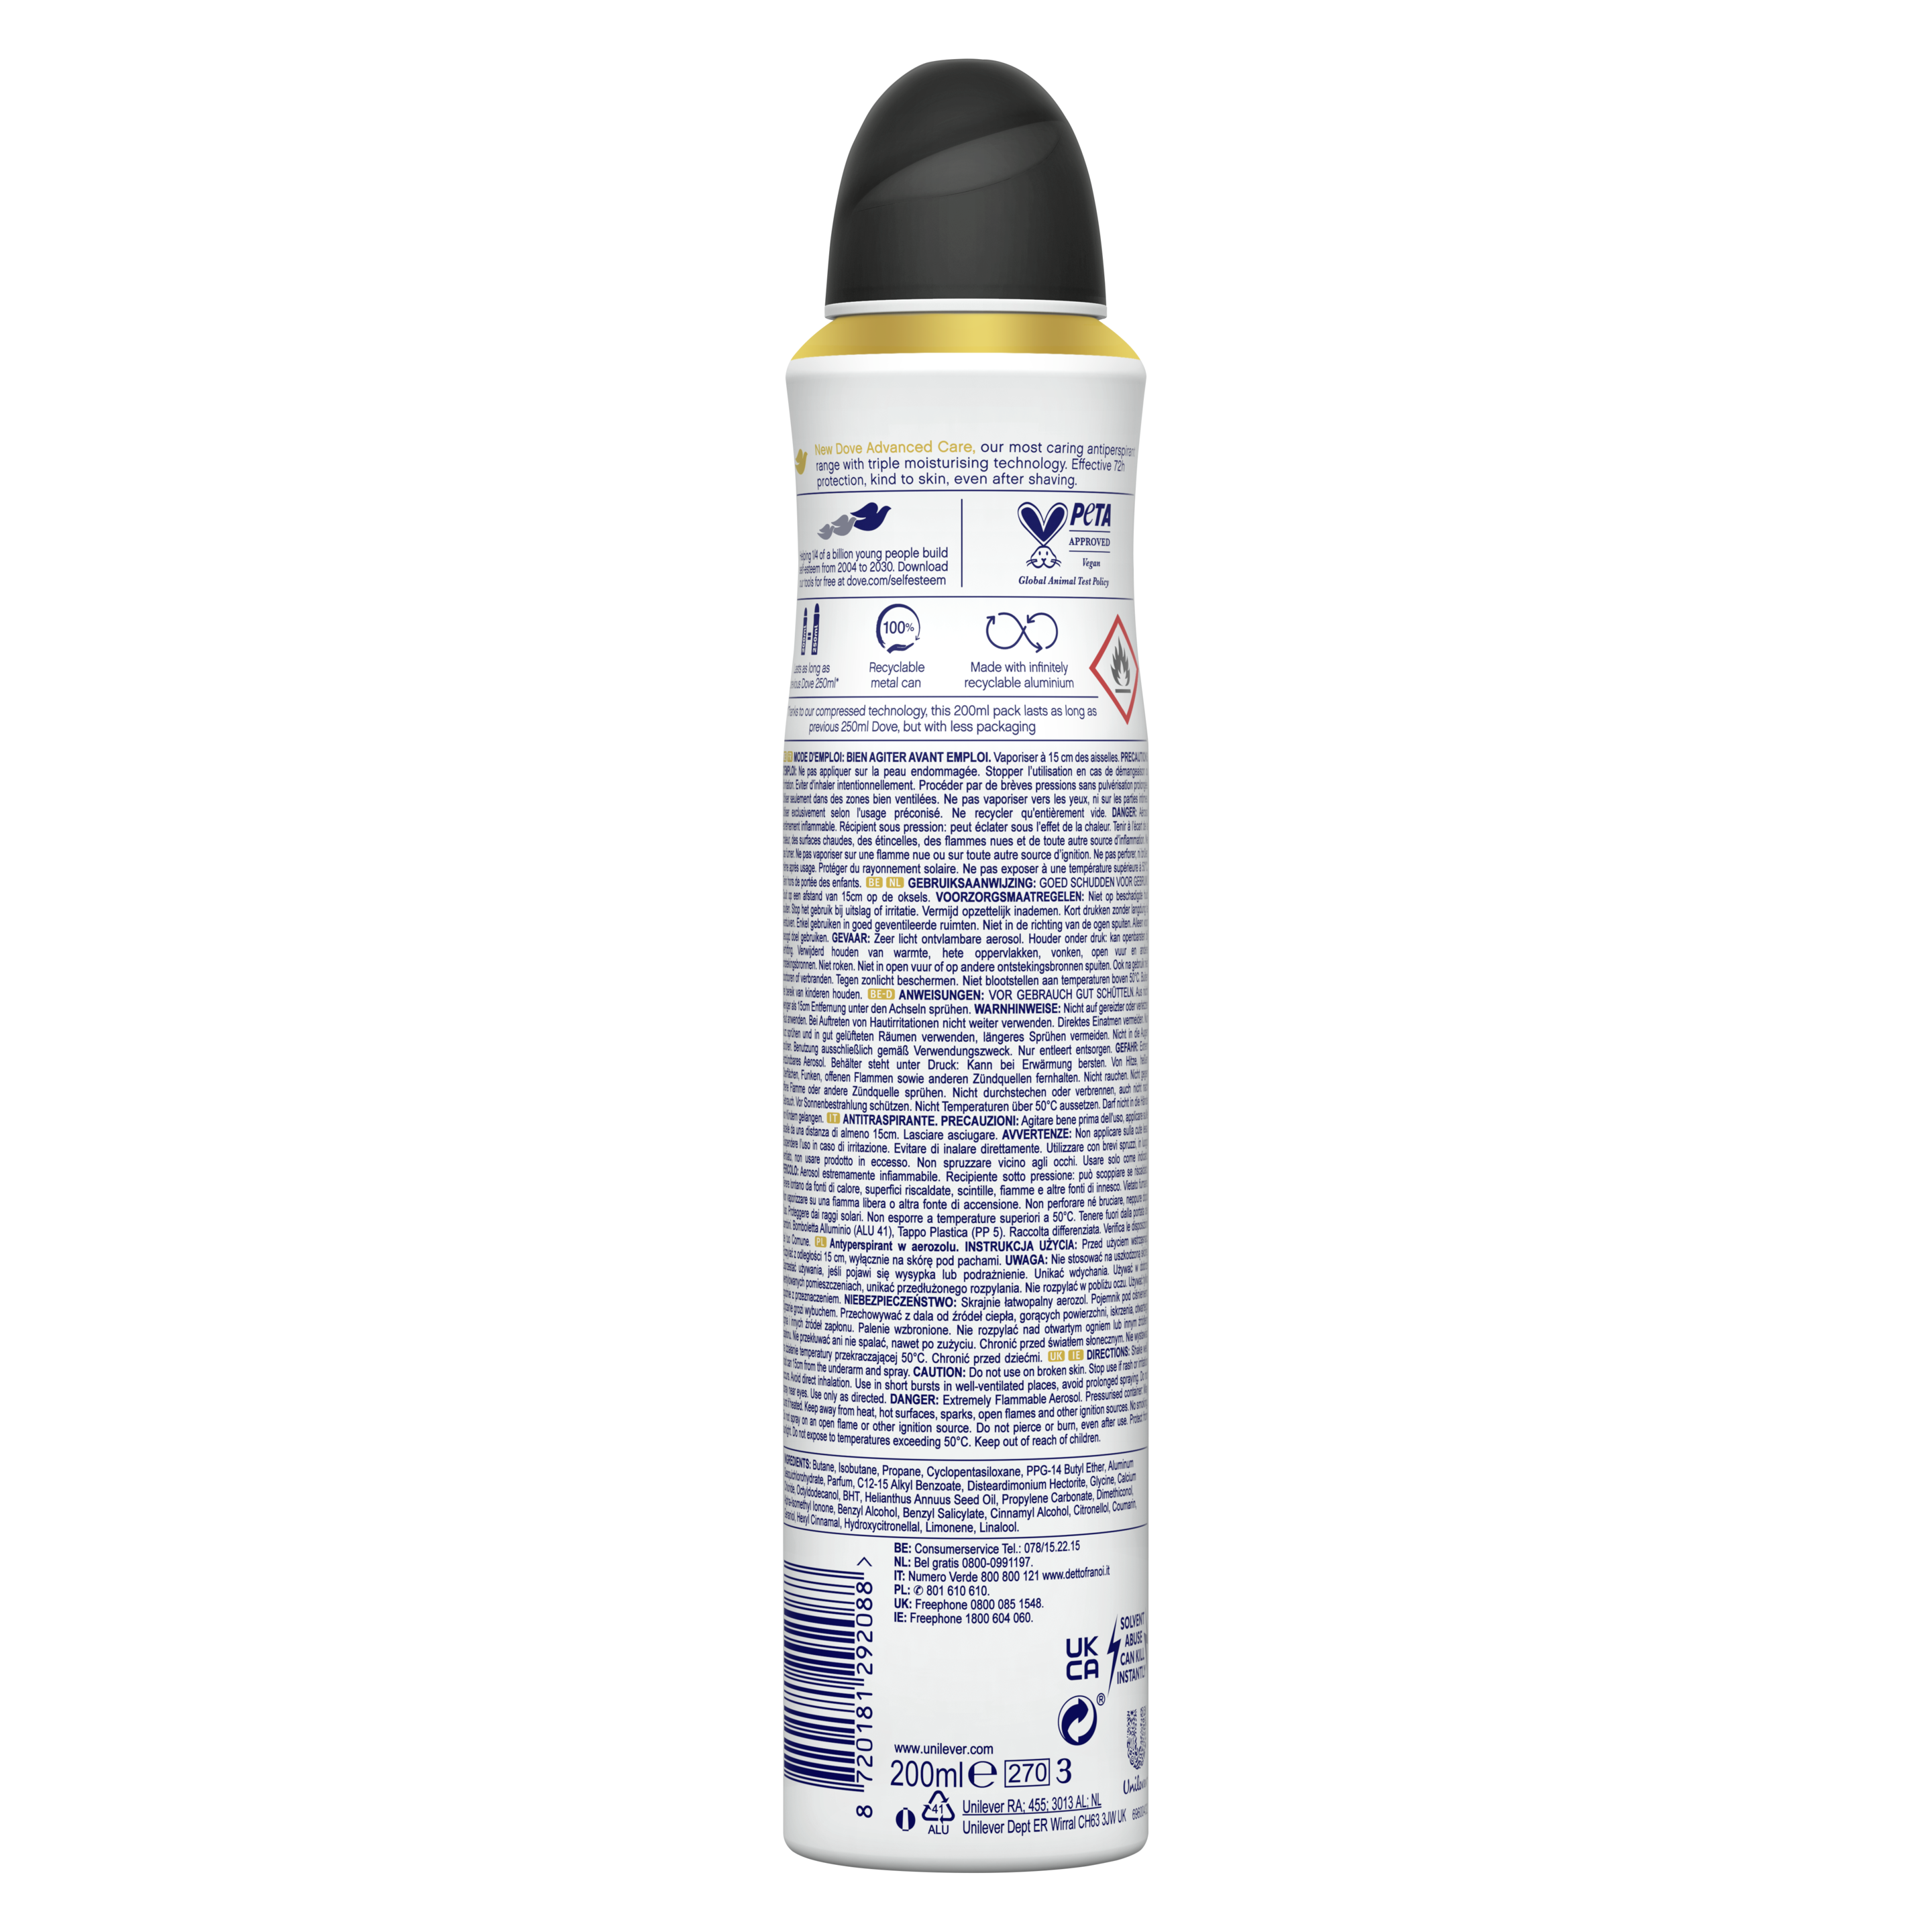 Advanced Care Invisible Dry Antiperspirant Deodorant Spray